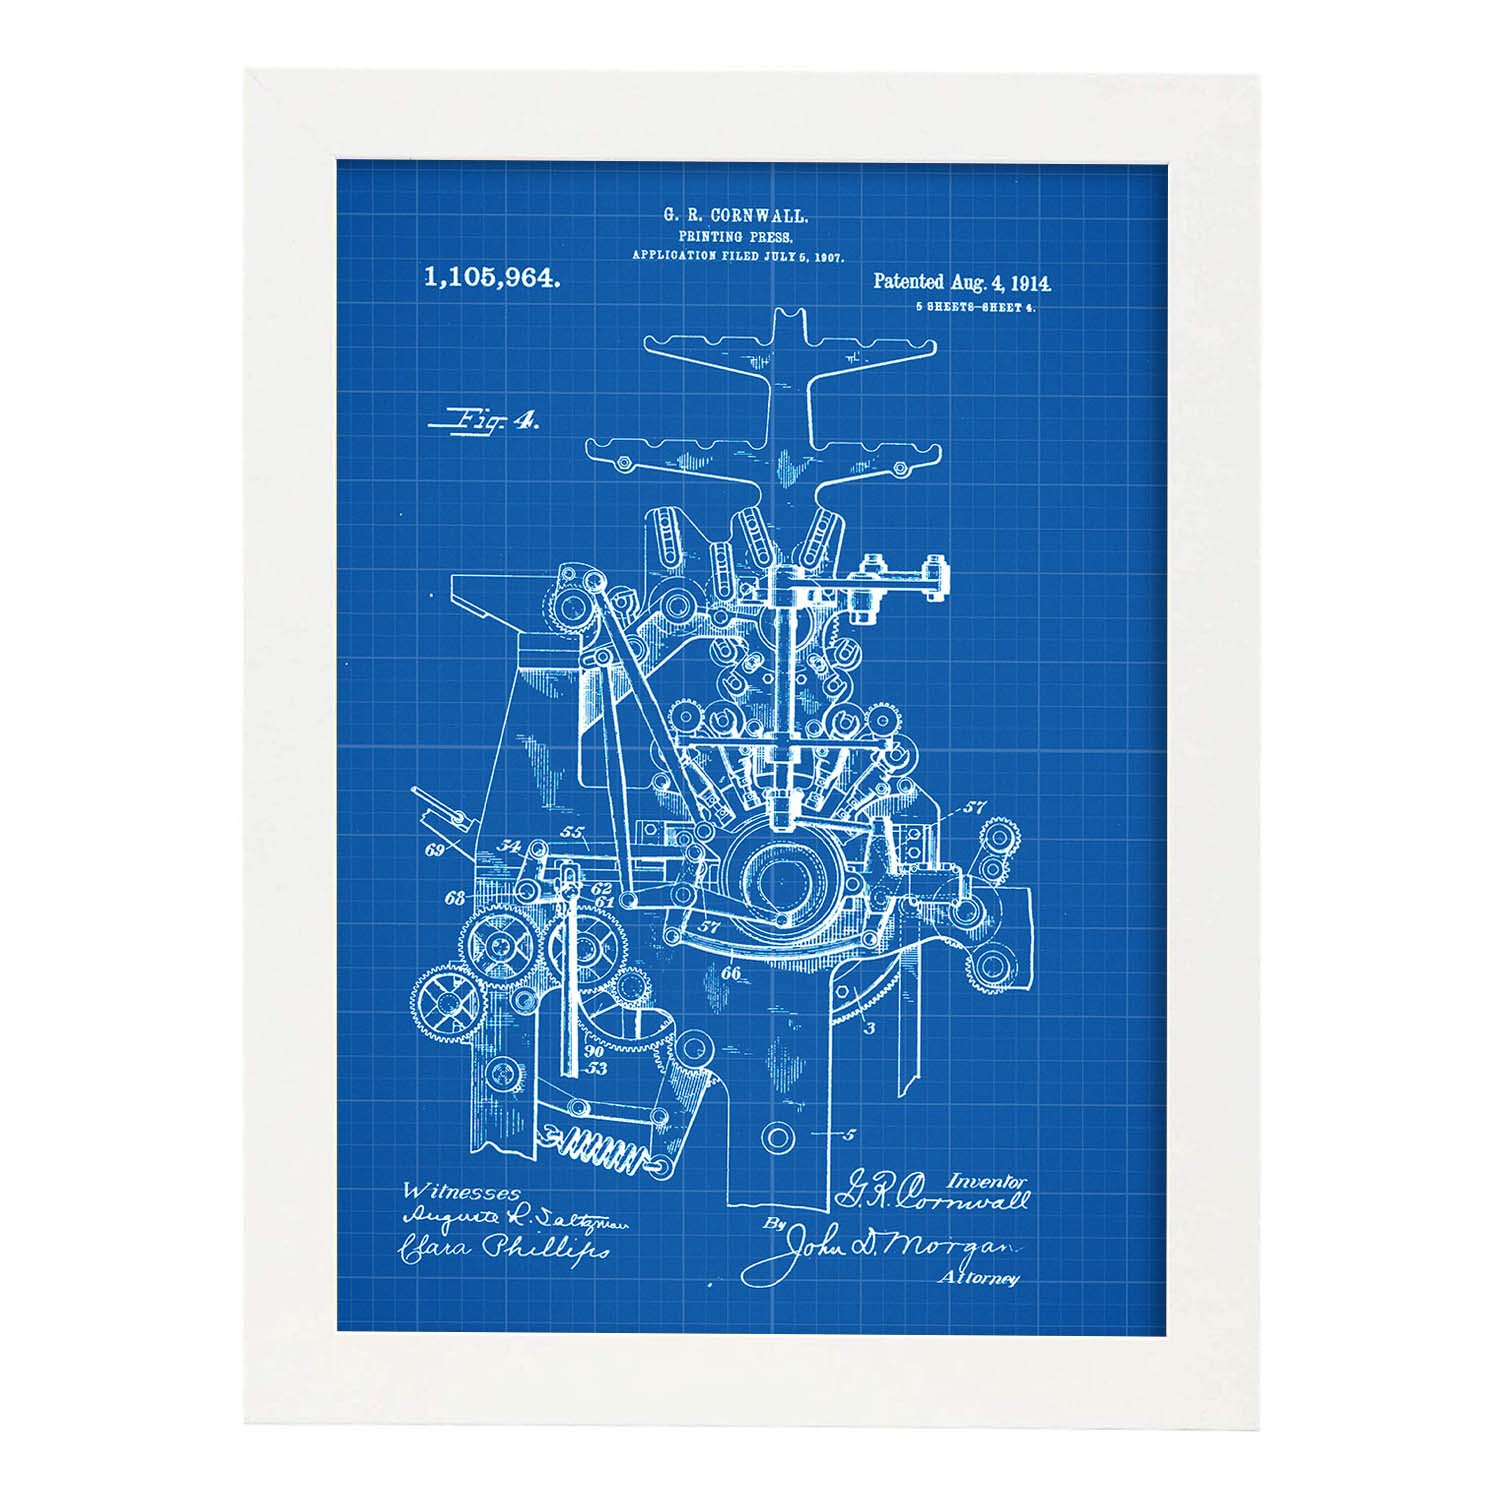 Poster con patente de Prensa de impresion 4. Lámina con diseño de patente antigua-Artwork-Nacnic-A3-Marco Blanco-Nacnic Estudio SL